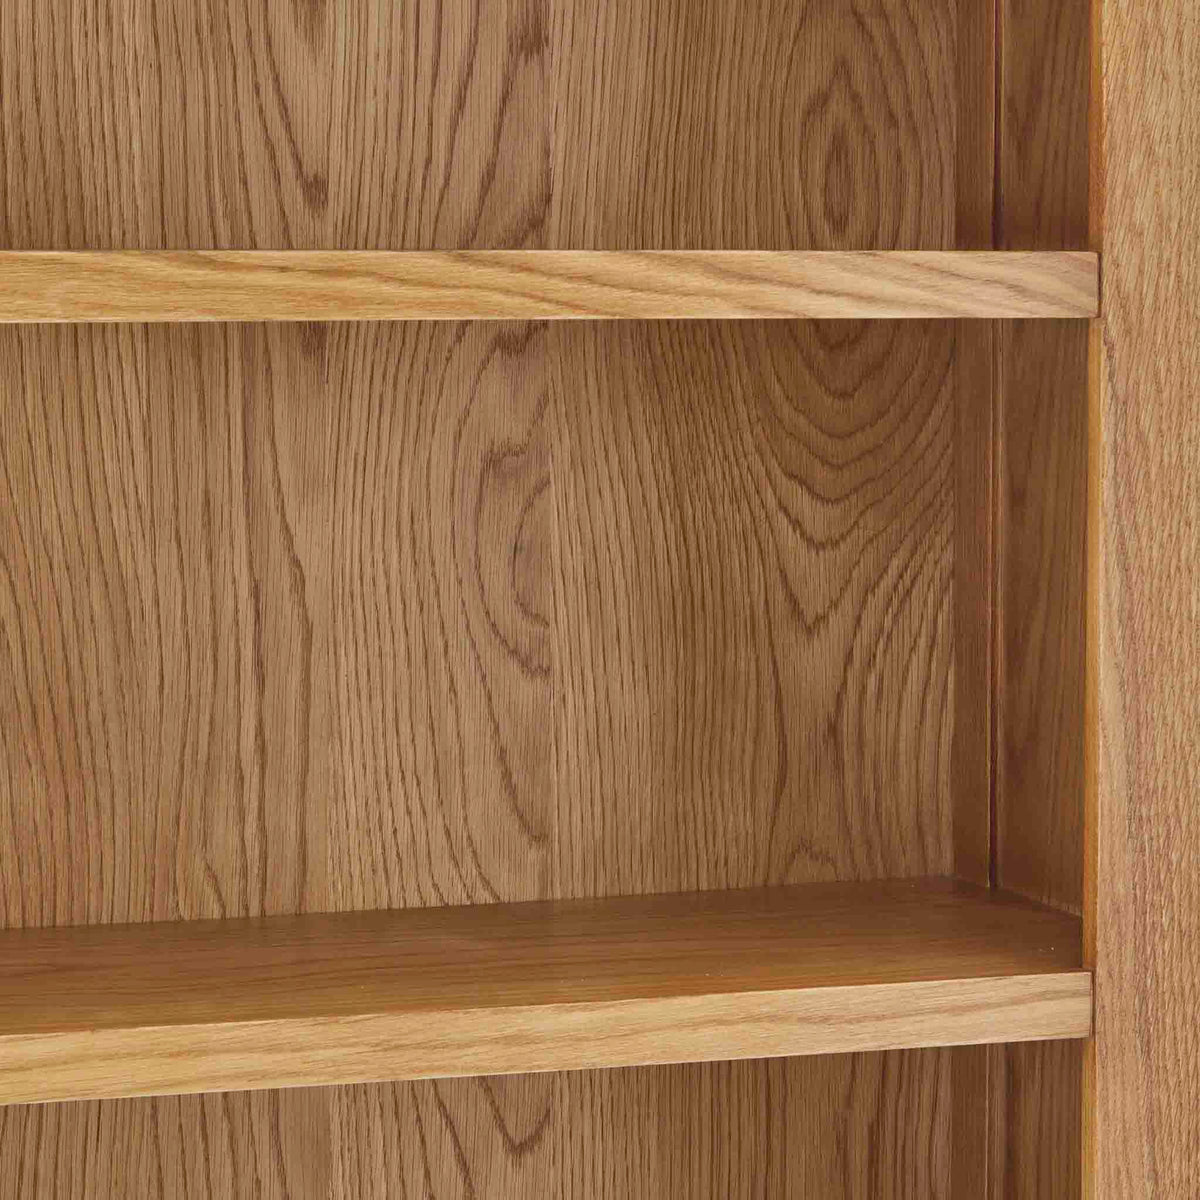  Abbey Grande Tall Narrow Oak Bookcase - Close up of shelves